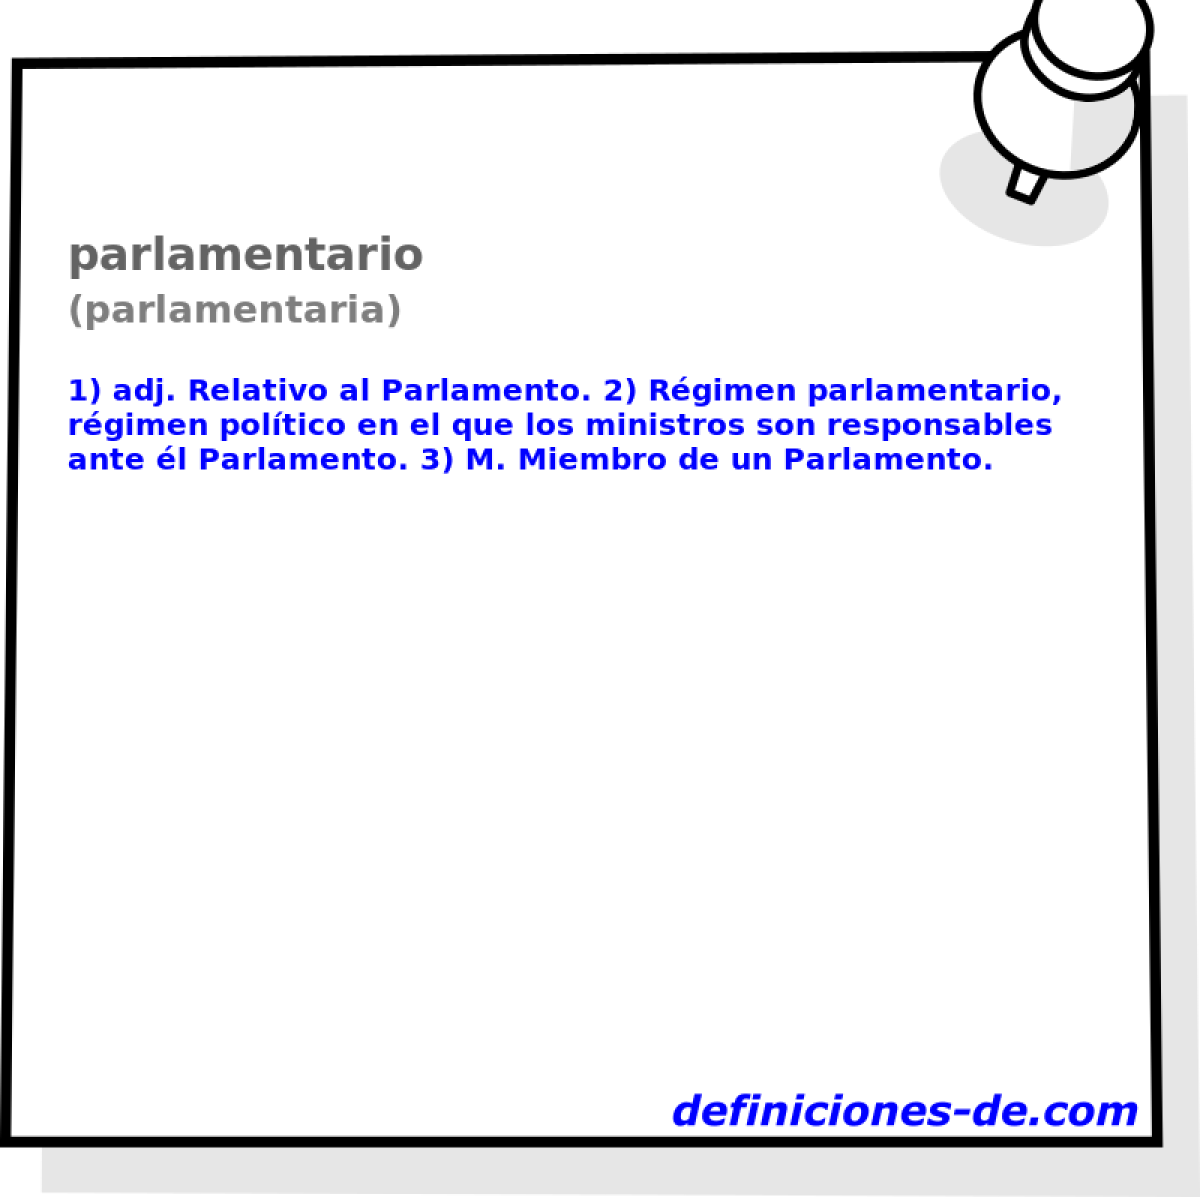 parlamentario (parlamentaria)